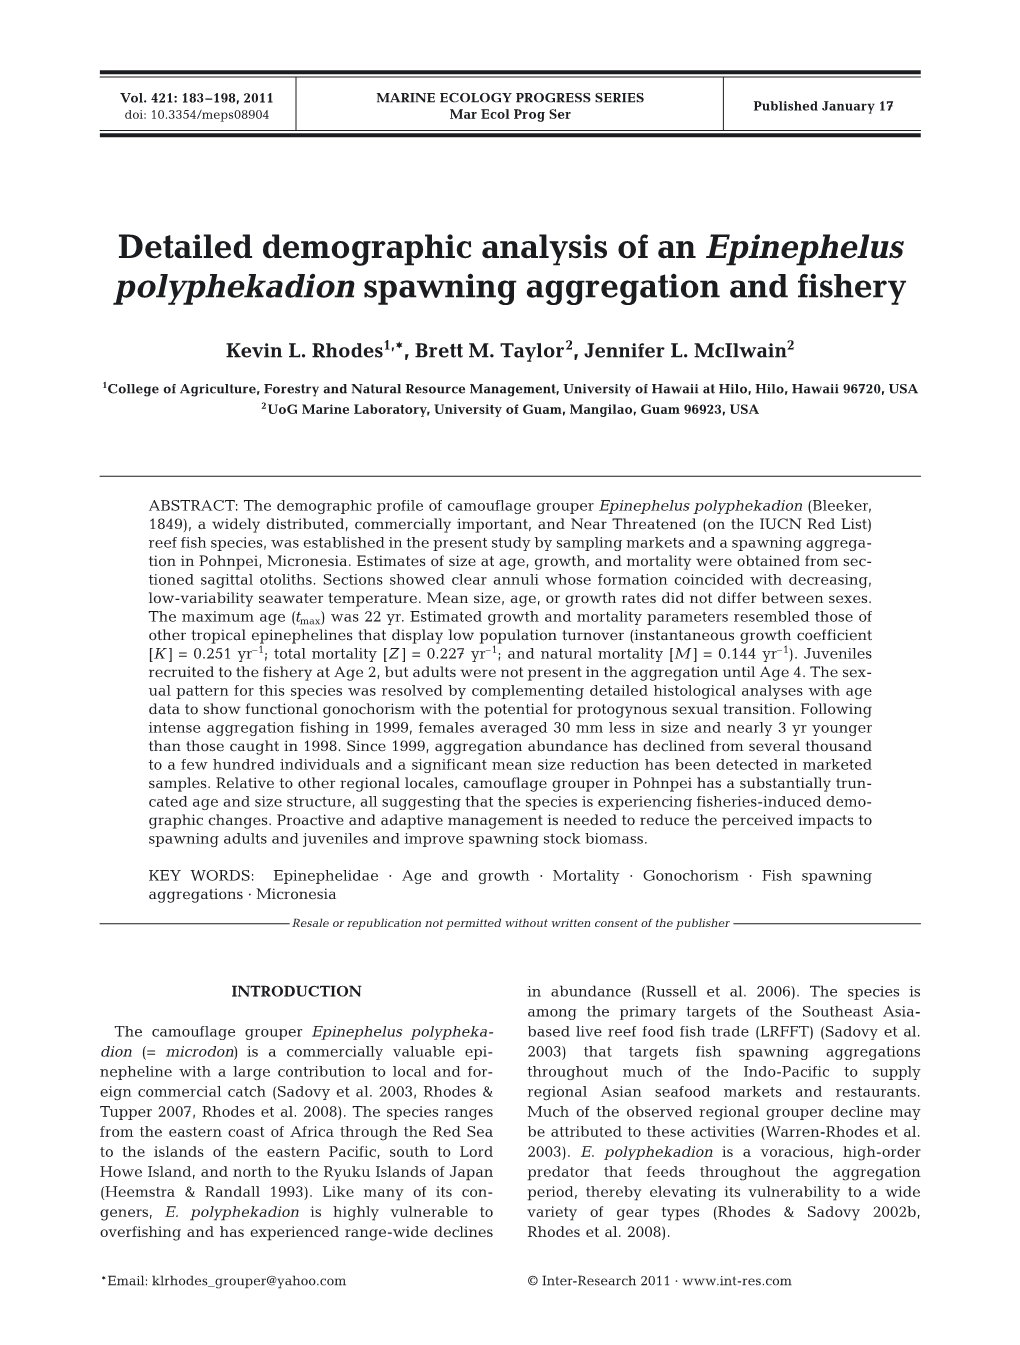 Detailed Demographic Analysis of an Epinephelus Polyphekadion Spawning Aggregation and Fishery